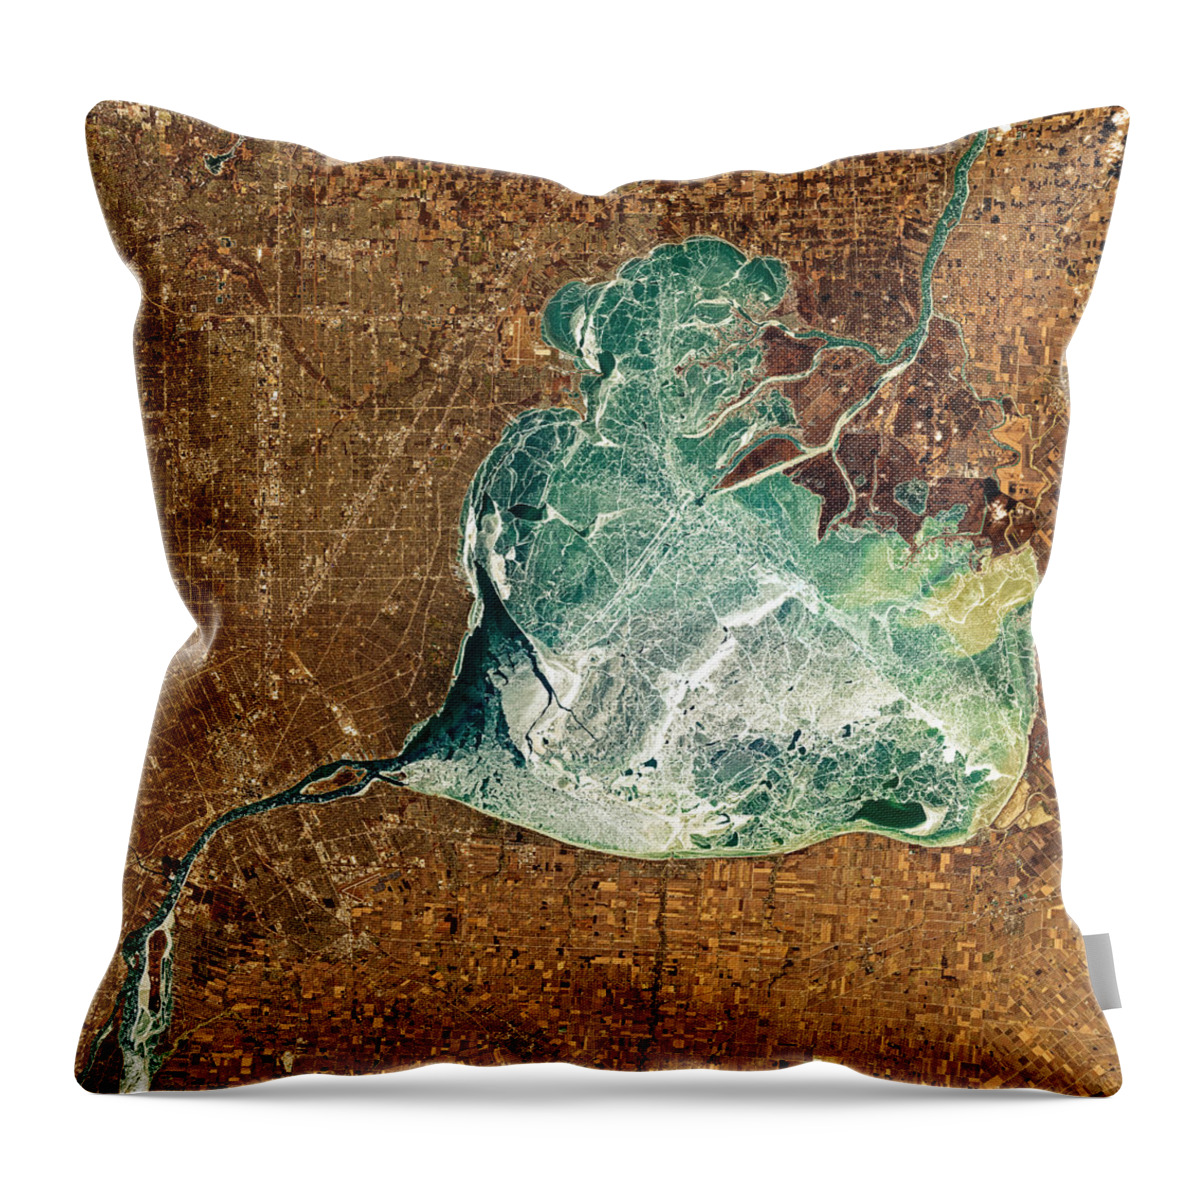 Satellite Image Throw Pillow featuring the digital art Frozen Lake St. Clair by Christian Pauschert